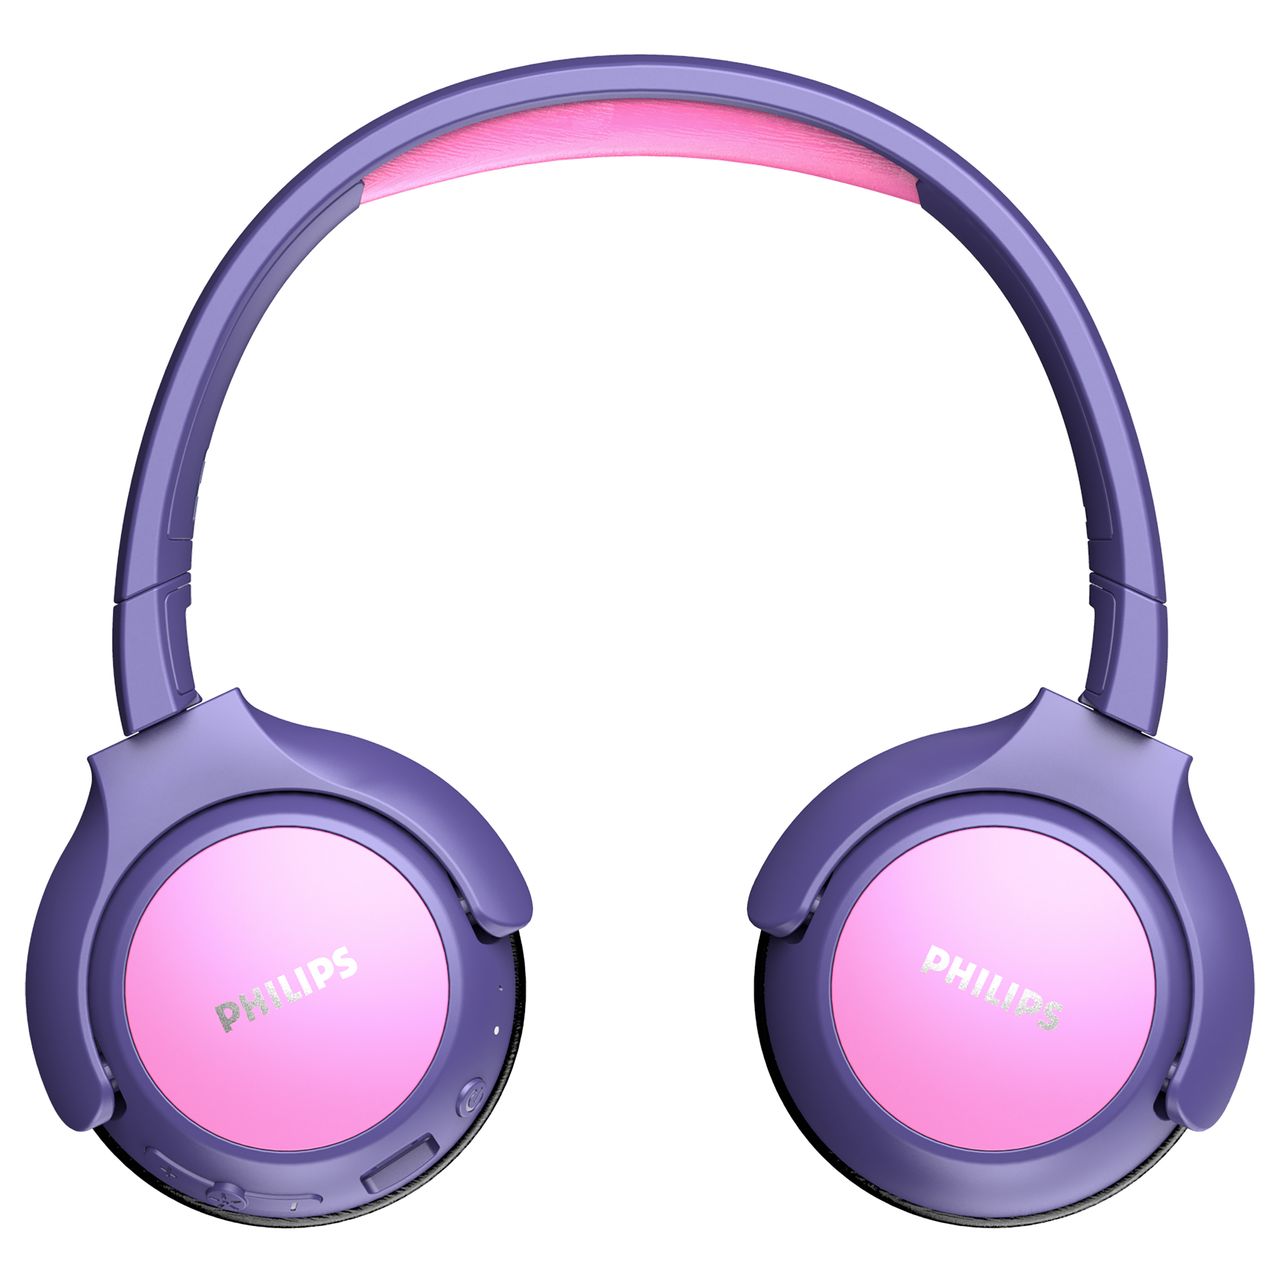 Philips Exertis Wireless On-Ear Headphones Pink 4895229100947 | eBay